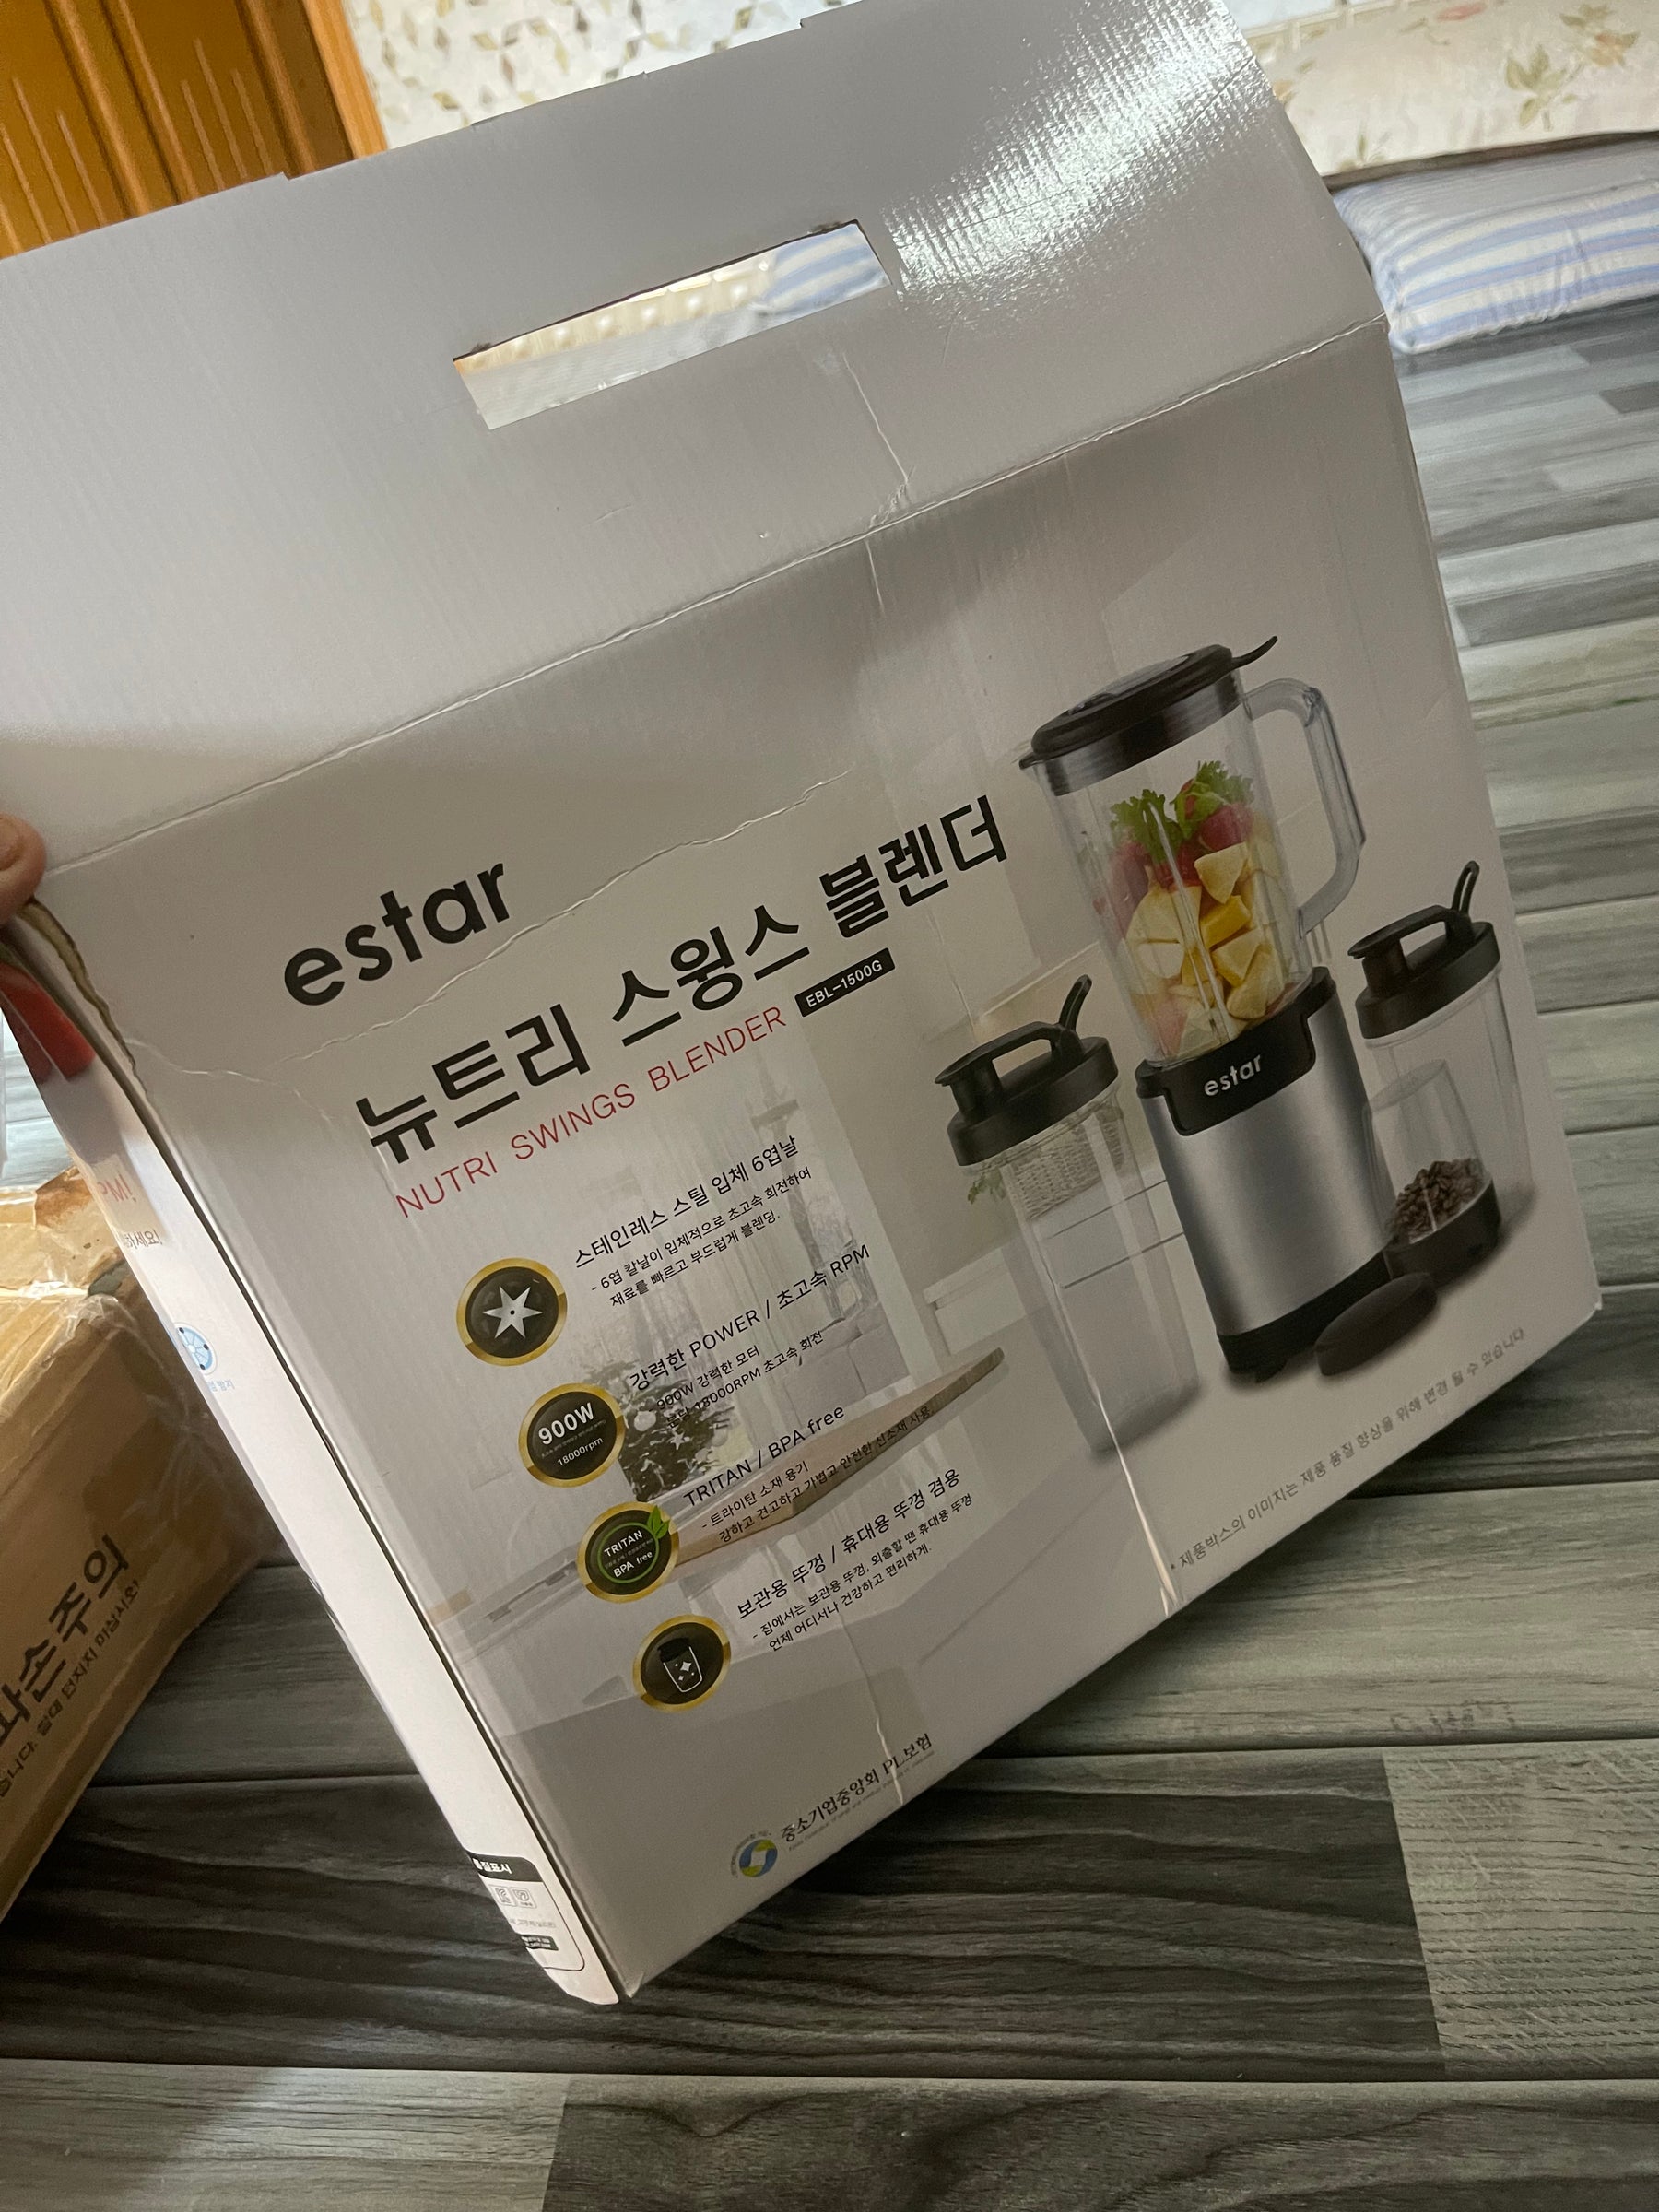 Orginal korean Brand ESTAR Juicer Blender